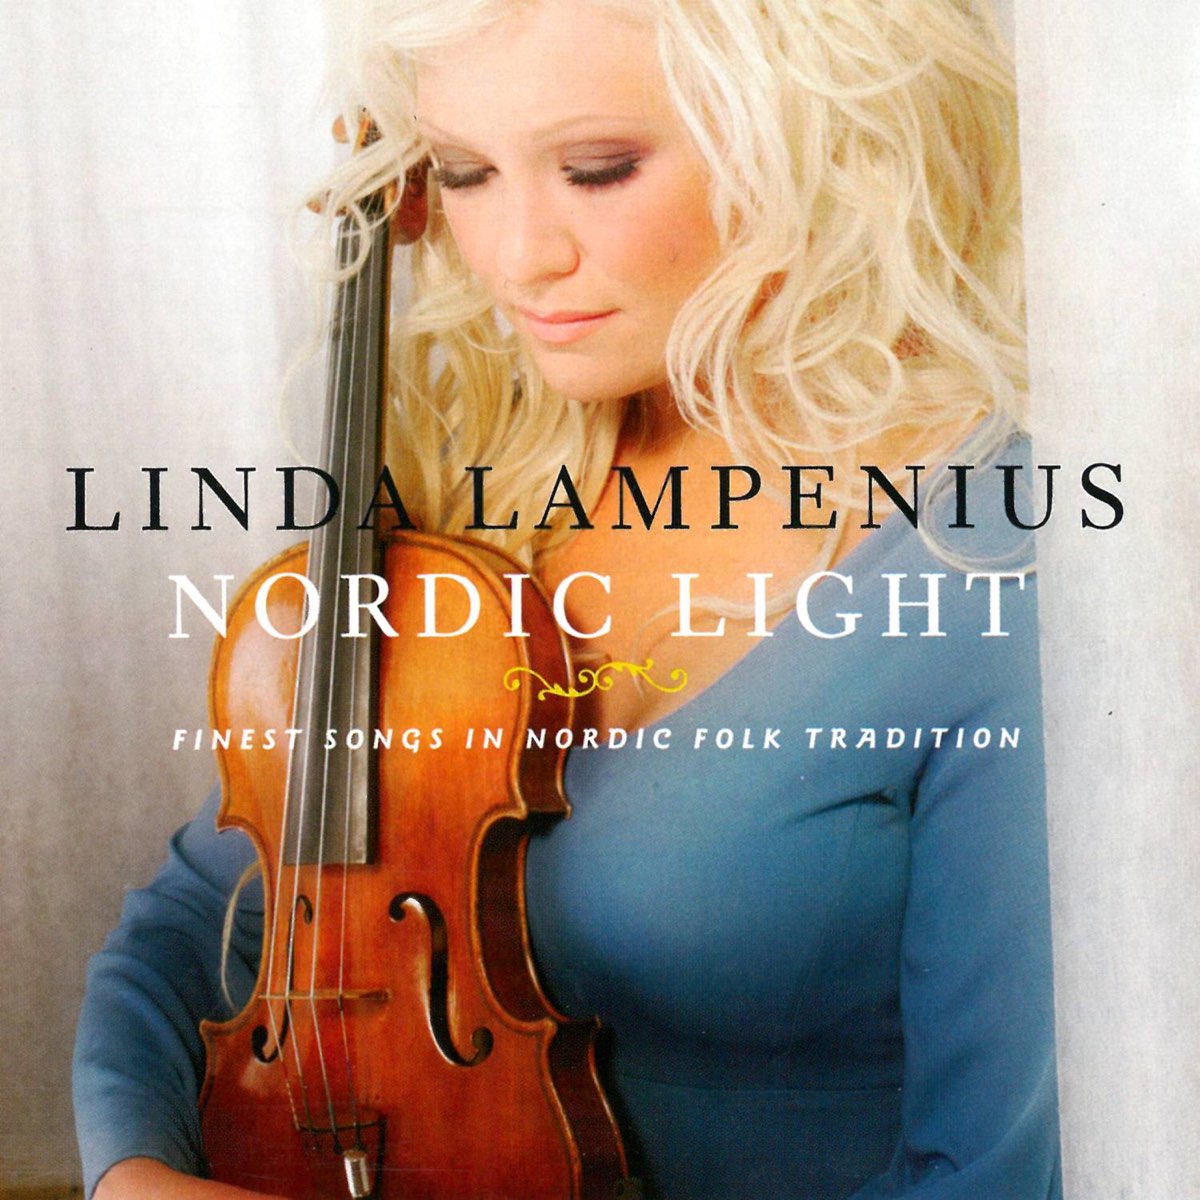 Linda Lampenius Nordic Light